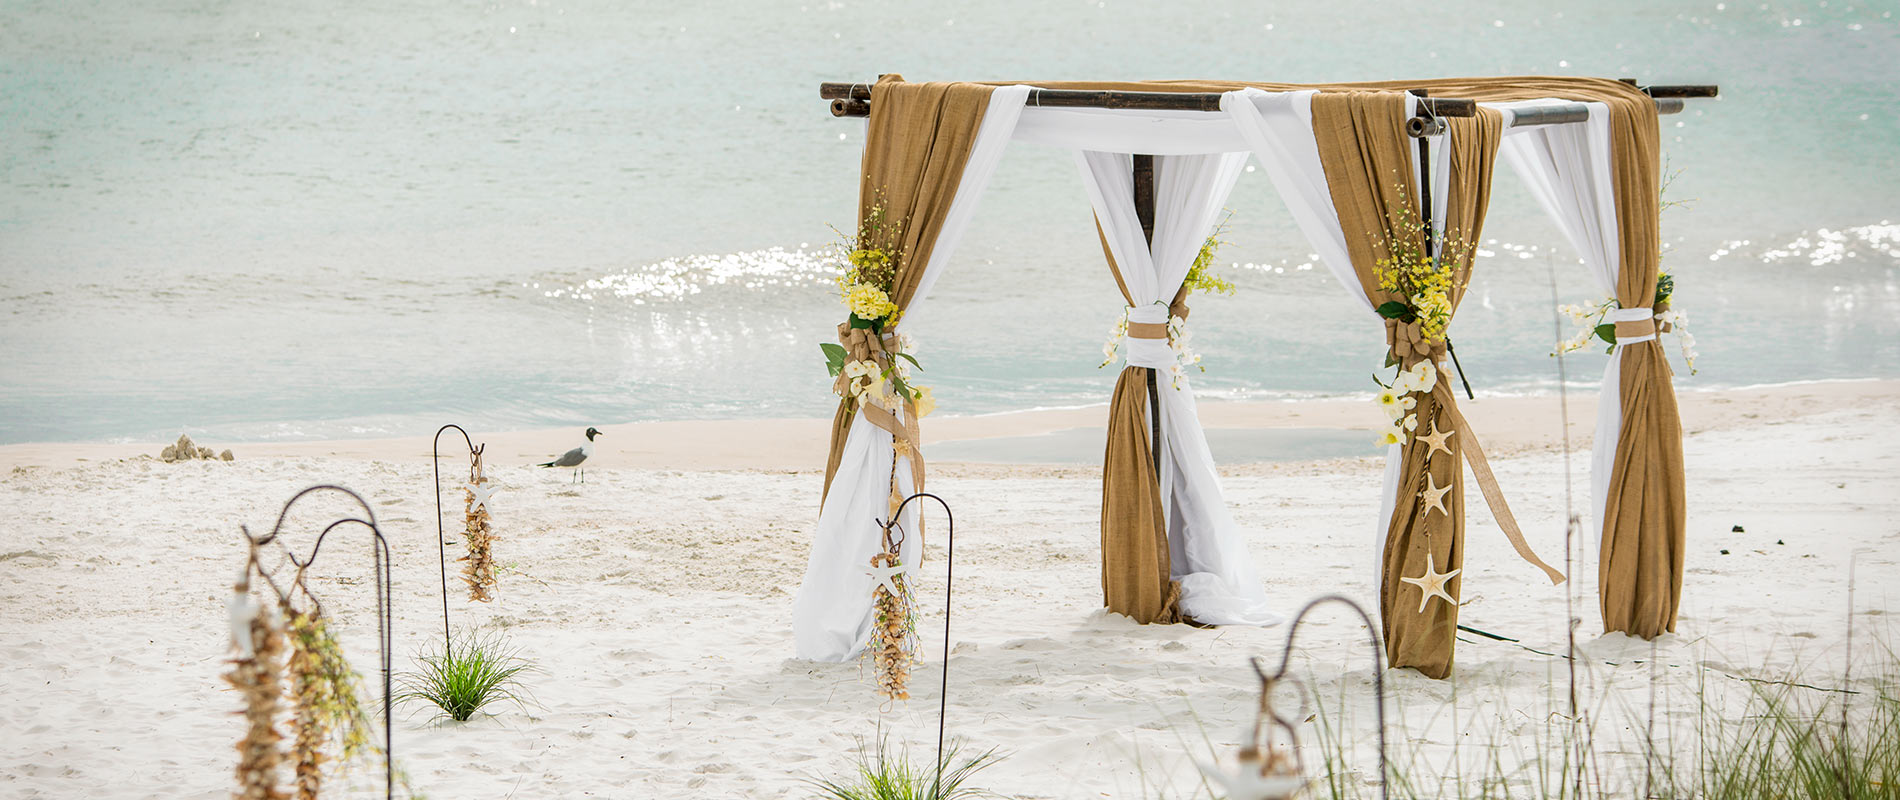 Mexico Beach Florida Wedding Vow Renewals, setup on the beach